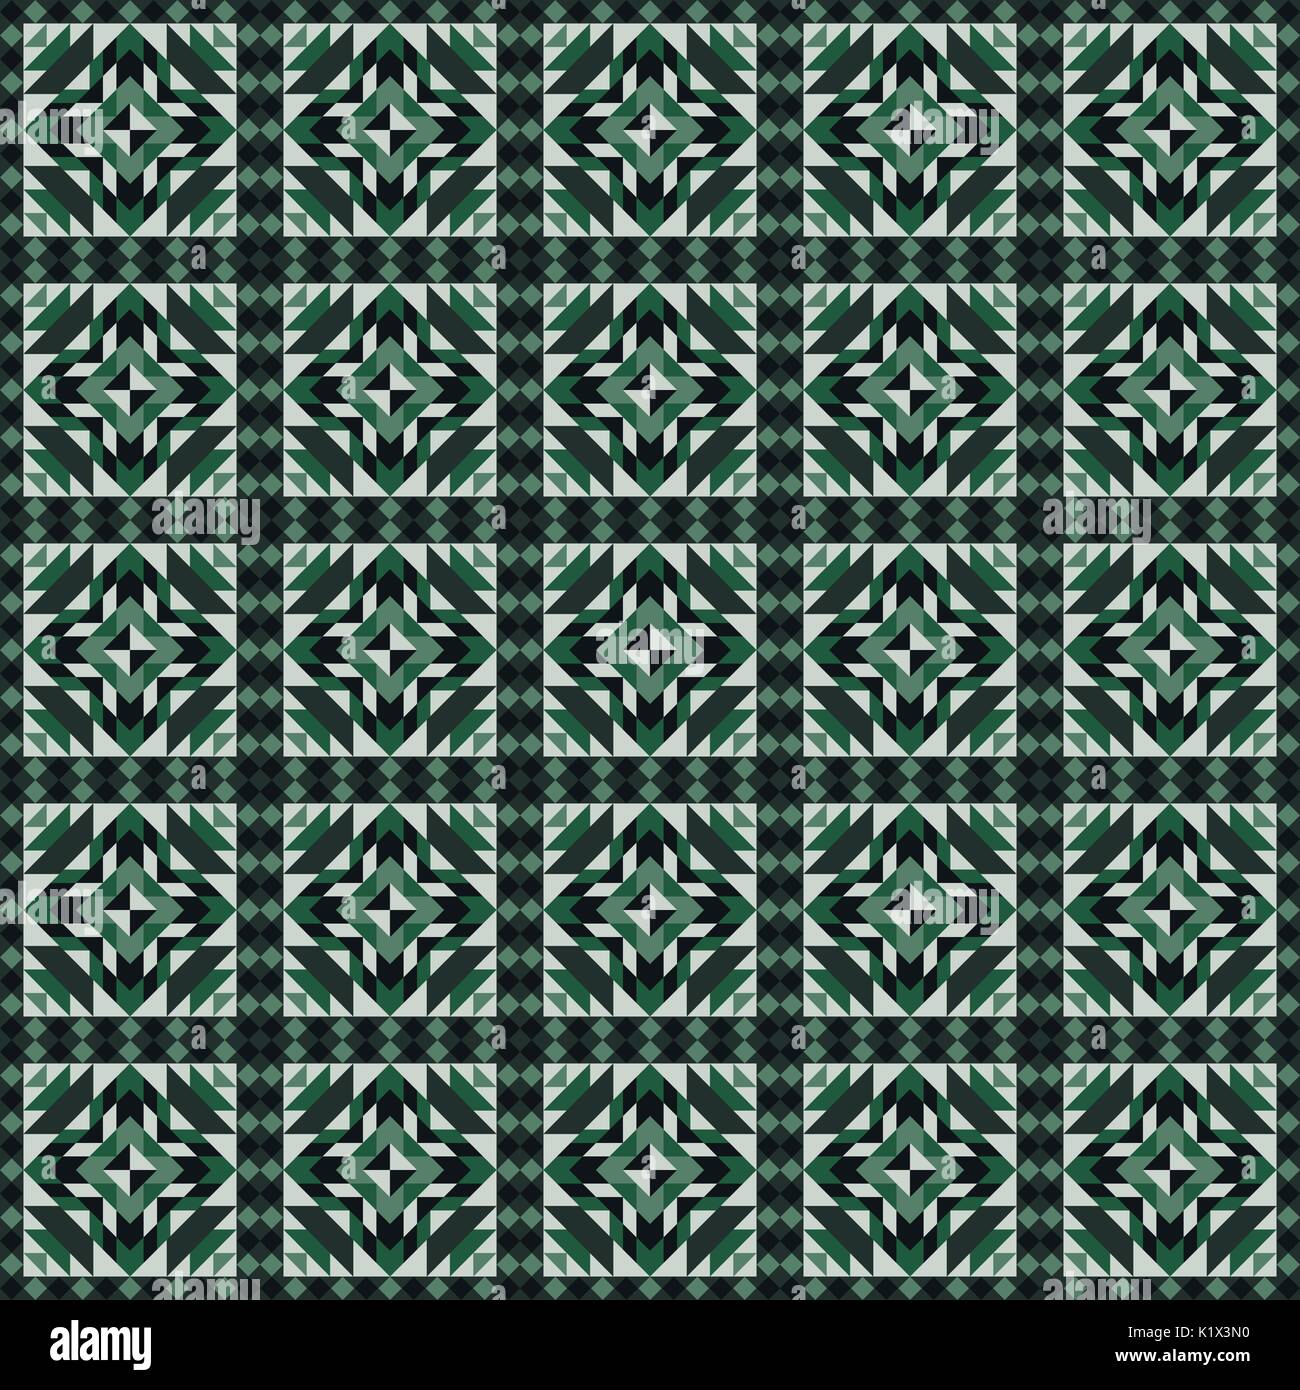 Linoleum nahtlose Muster. Geometrische Mosaik. Vector Illustration  Stock-Vektorgrafik - Alamy